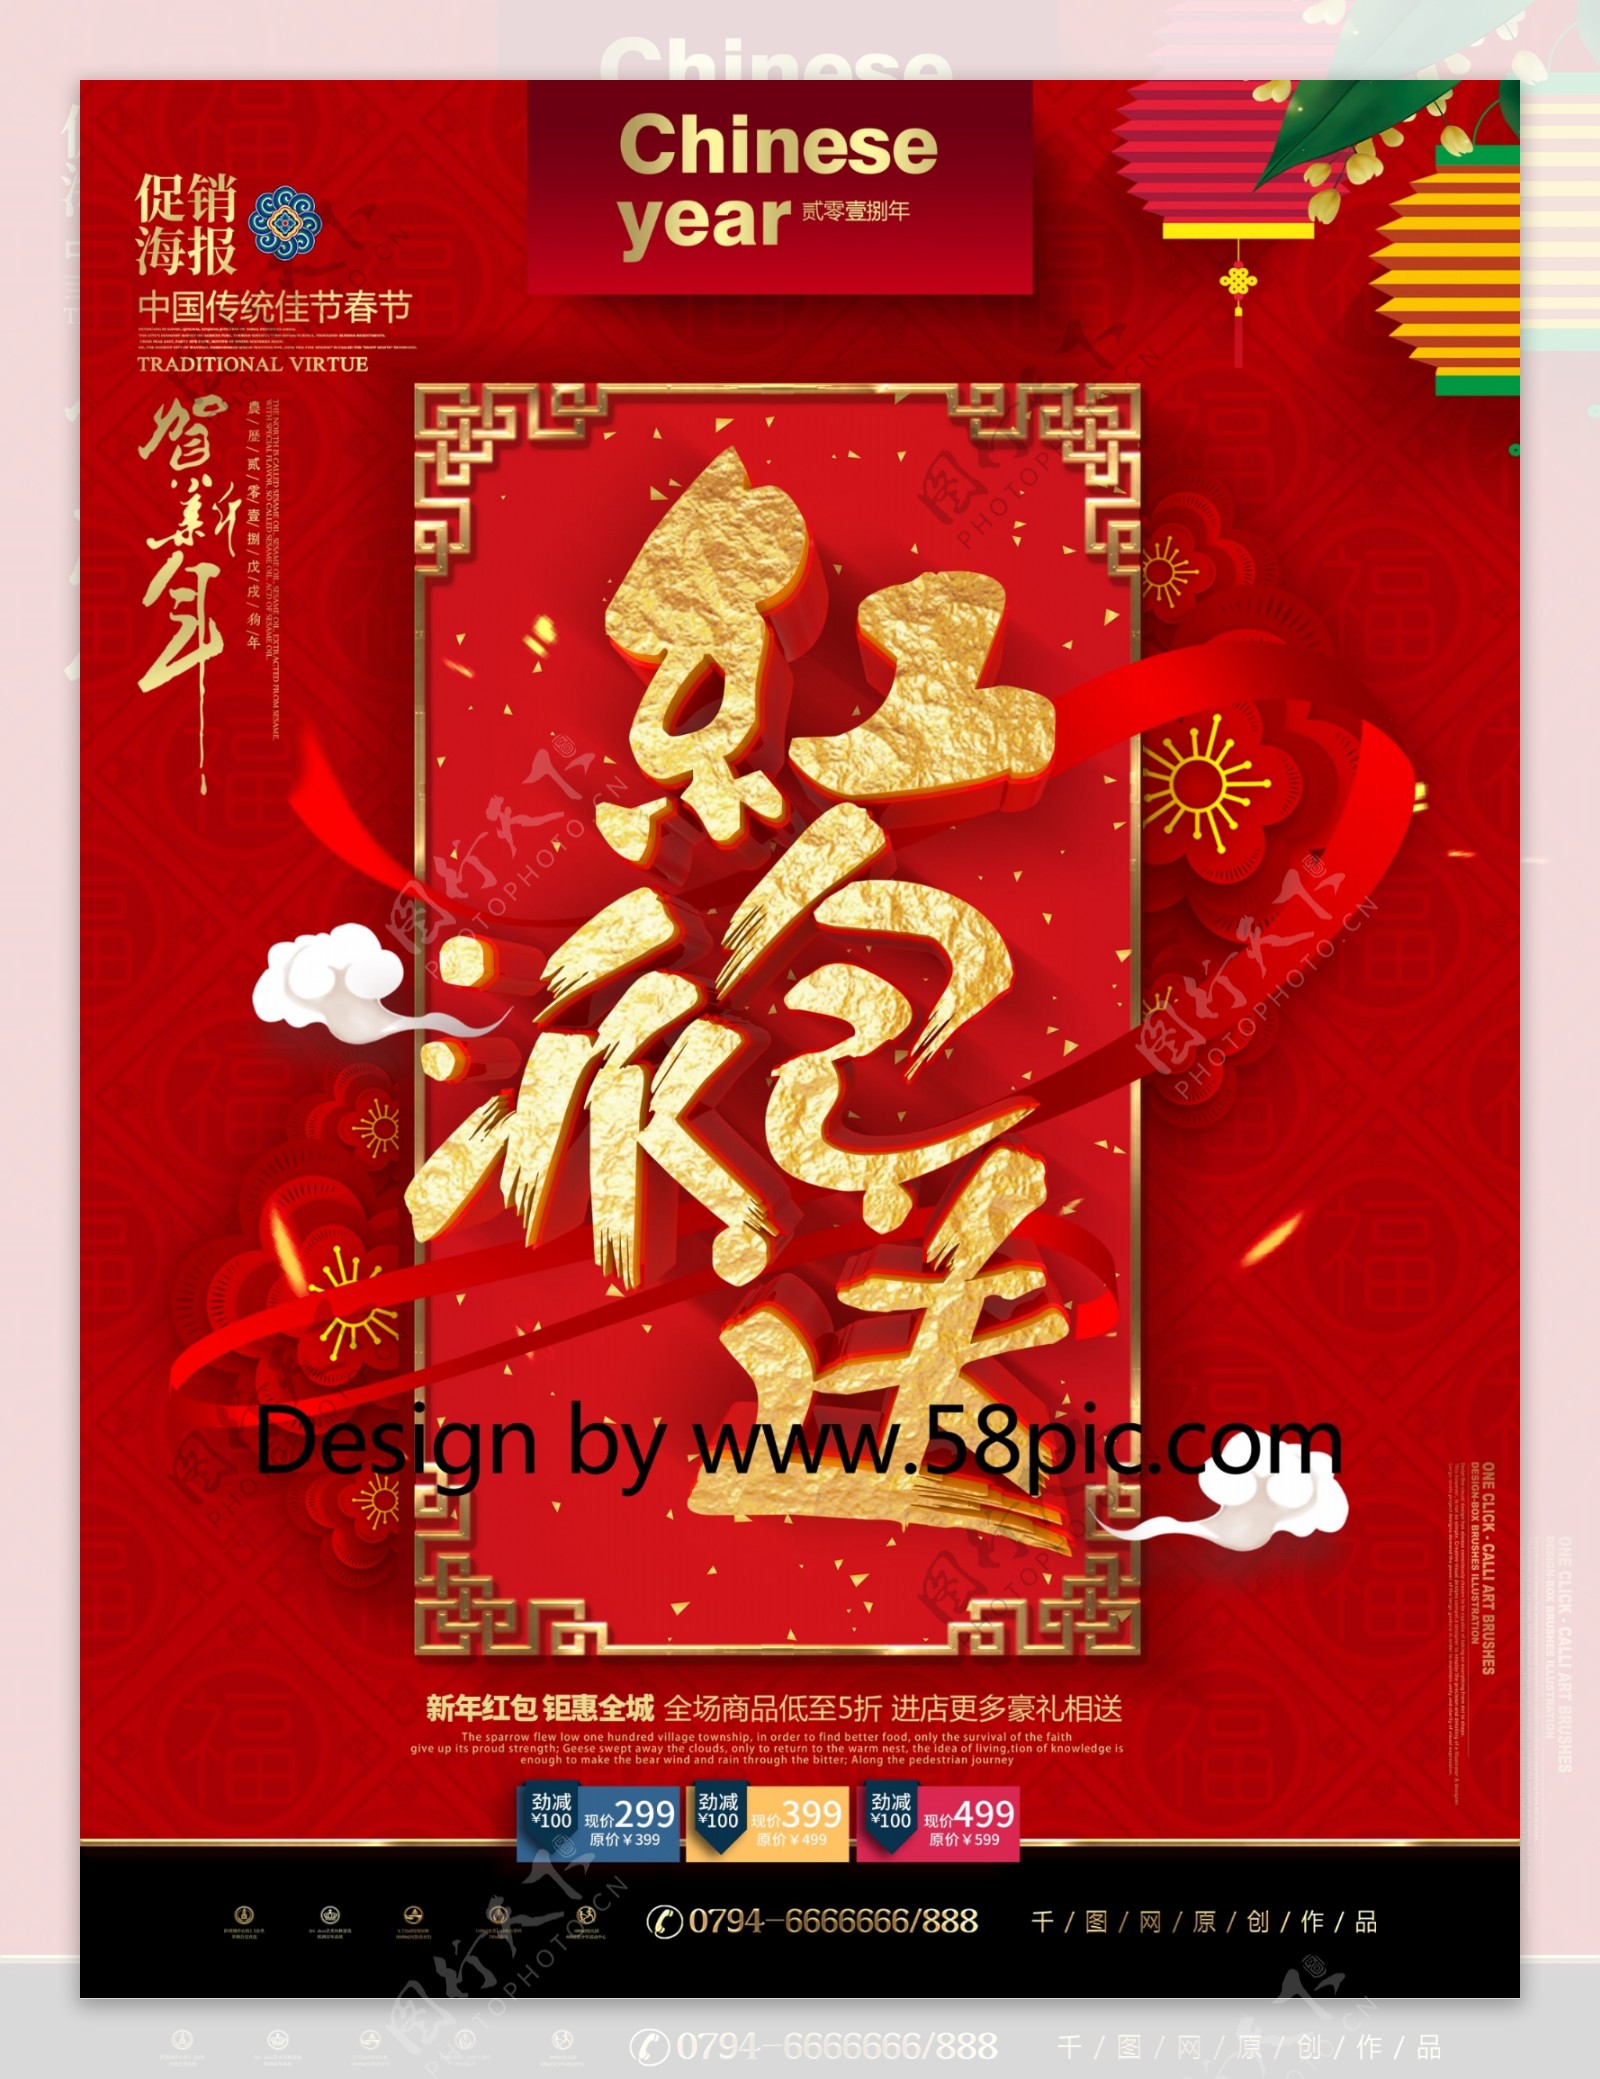 C4D创意红金书法字红包派送新年促销海报